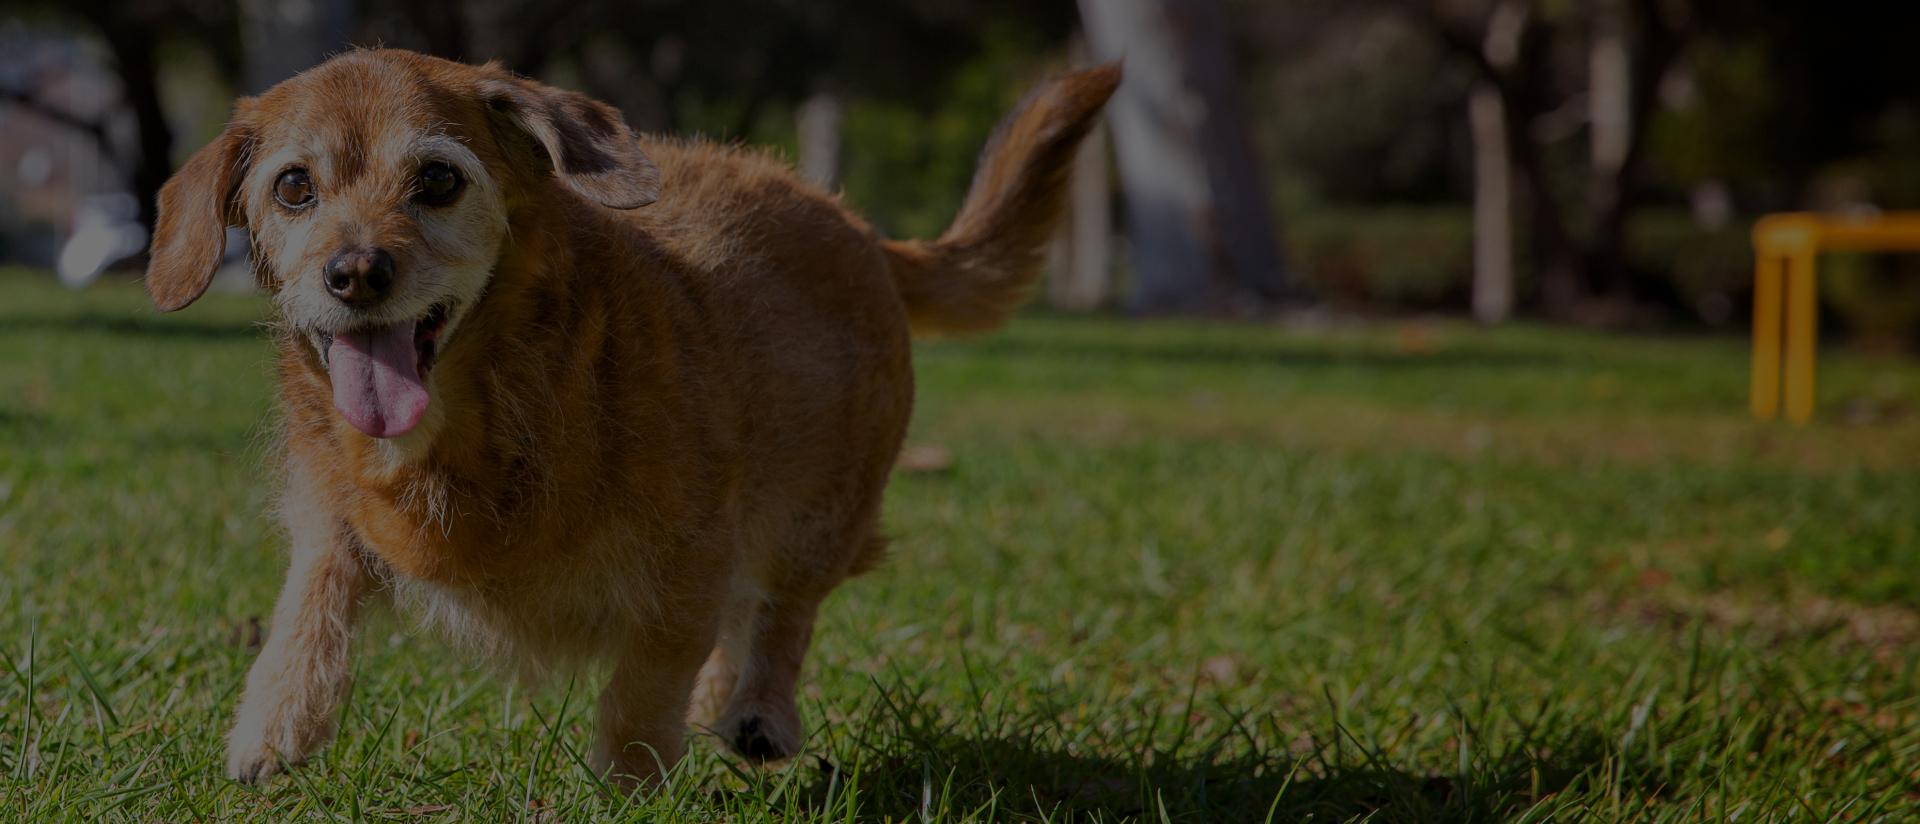 Small dog running on grass